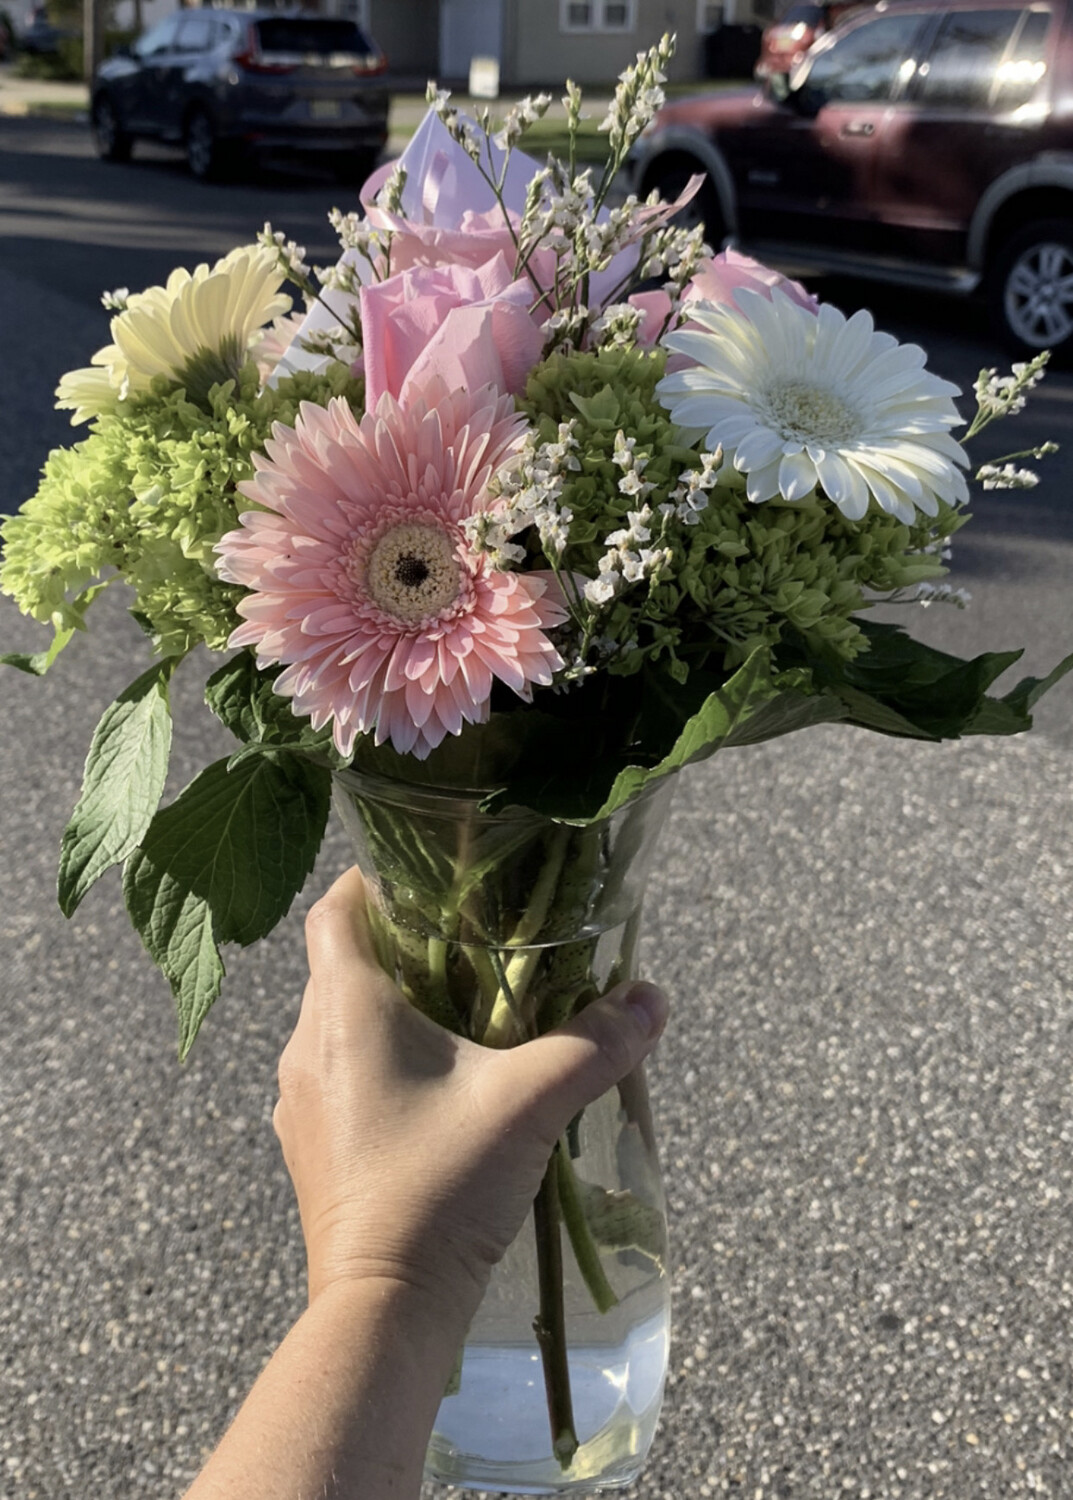 $55 Seasonal Fresh Flower Vase Arrangement